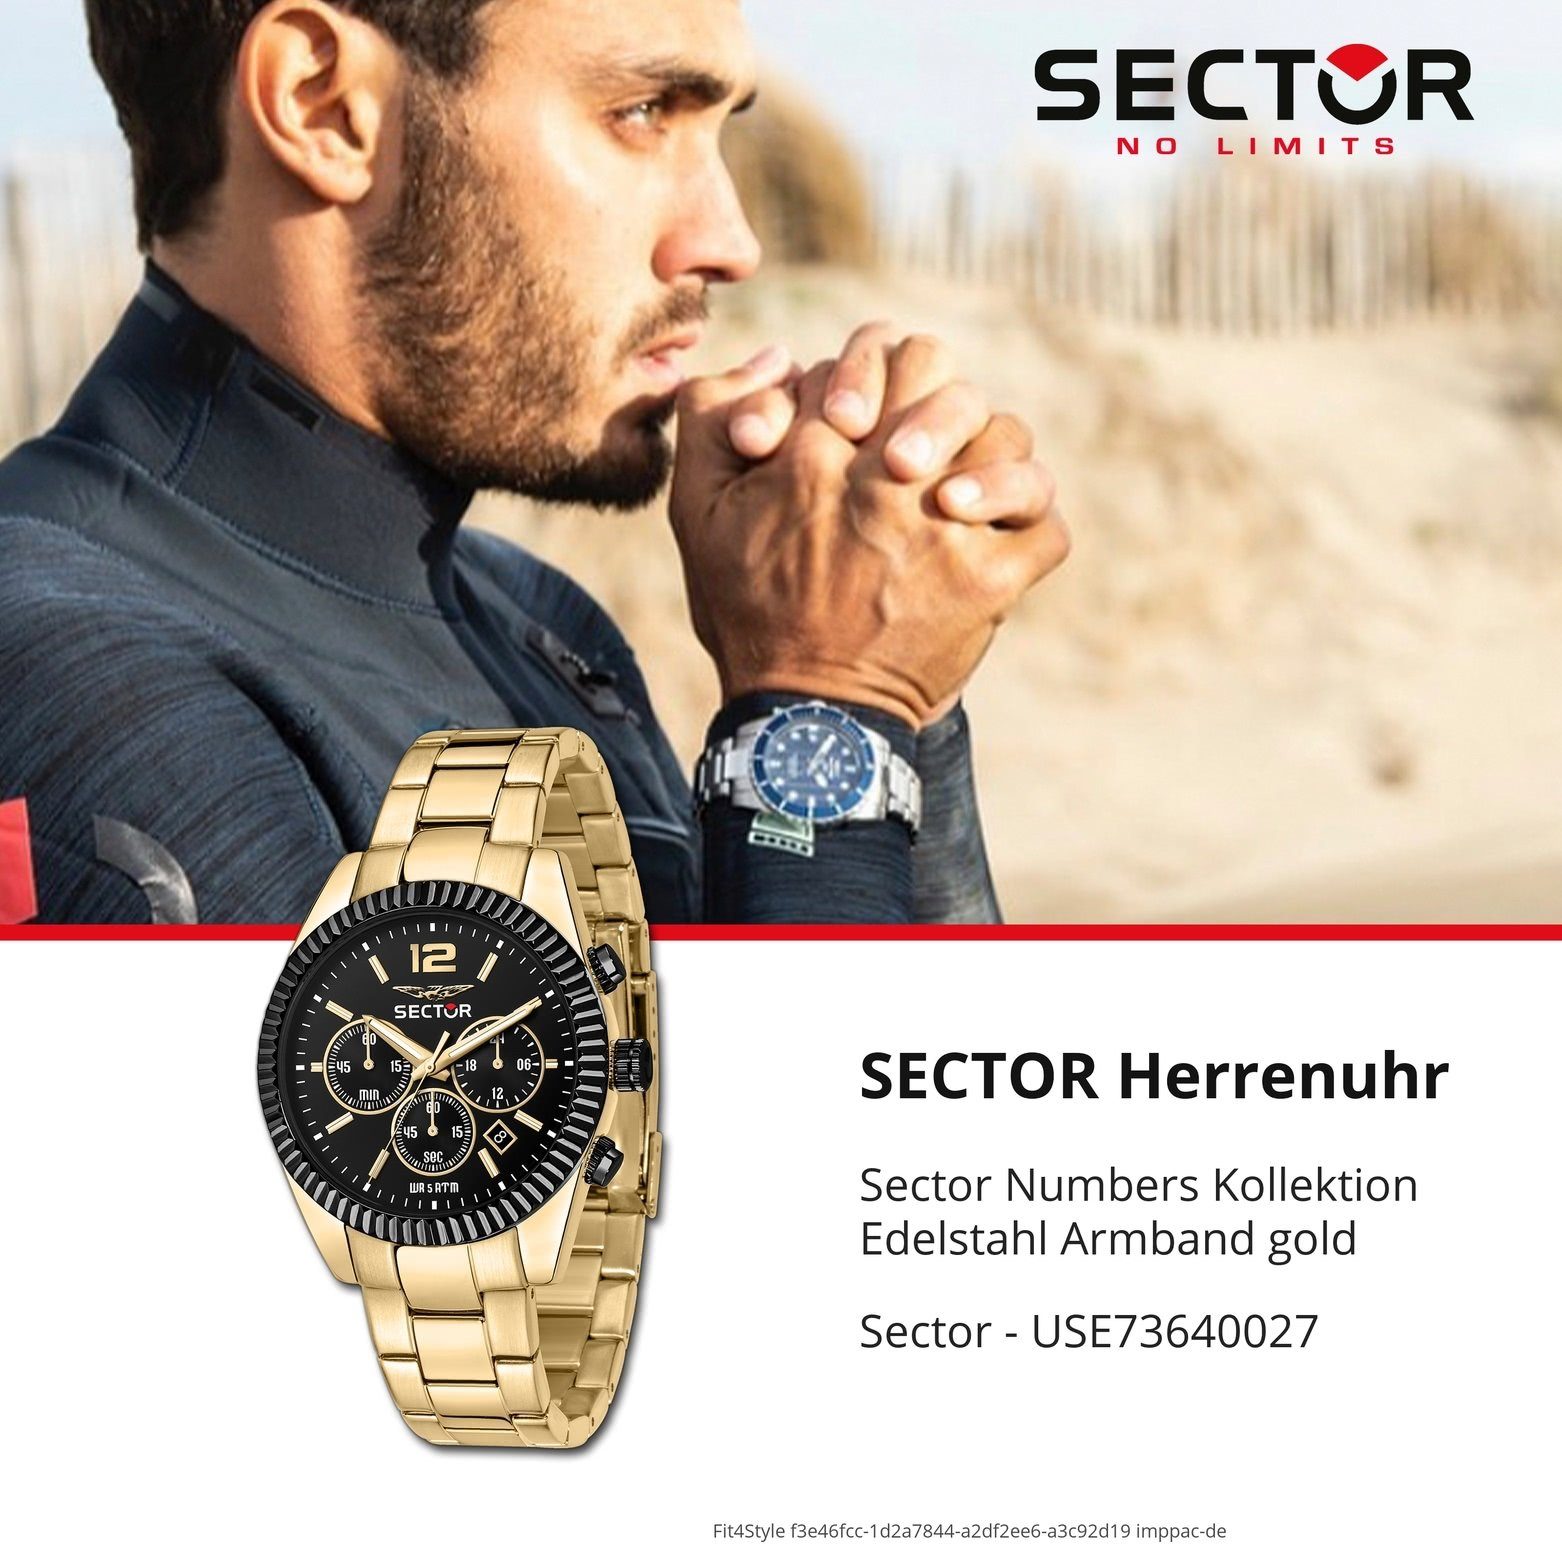 Chronograph Sector Herren Sector Limits Edelstahlarmband Sector Fashion groß Armbanduhr Armbanduhr gold, rund, No (45mm), Chrono, Herren